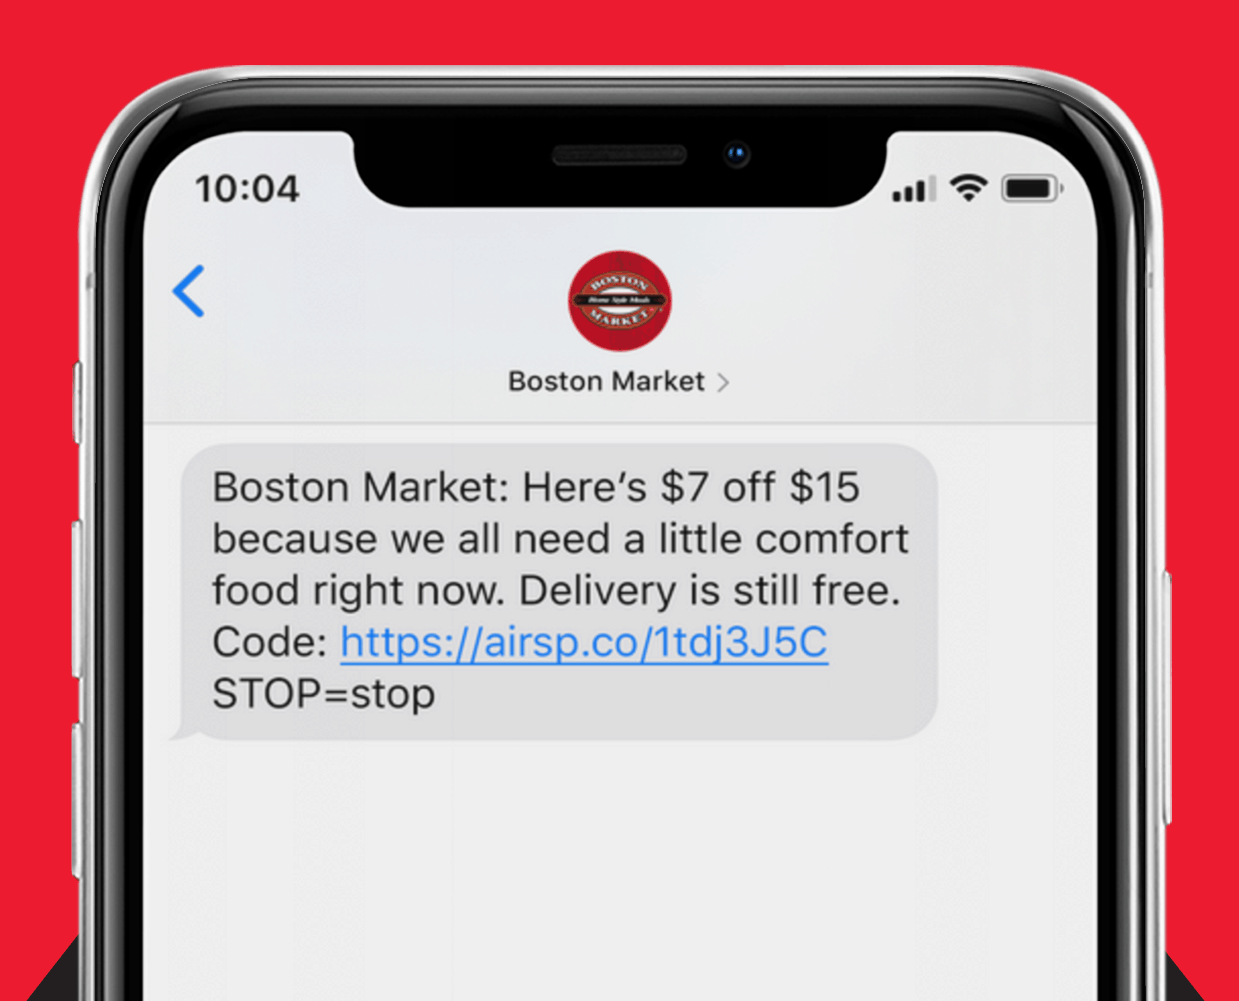 Boston Market SMS Marketing Example for Restaurants